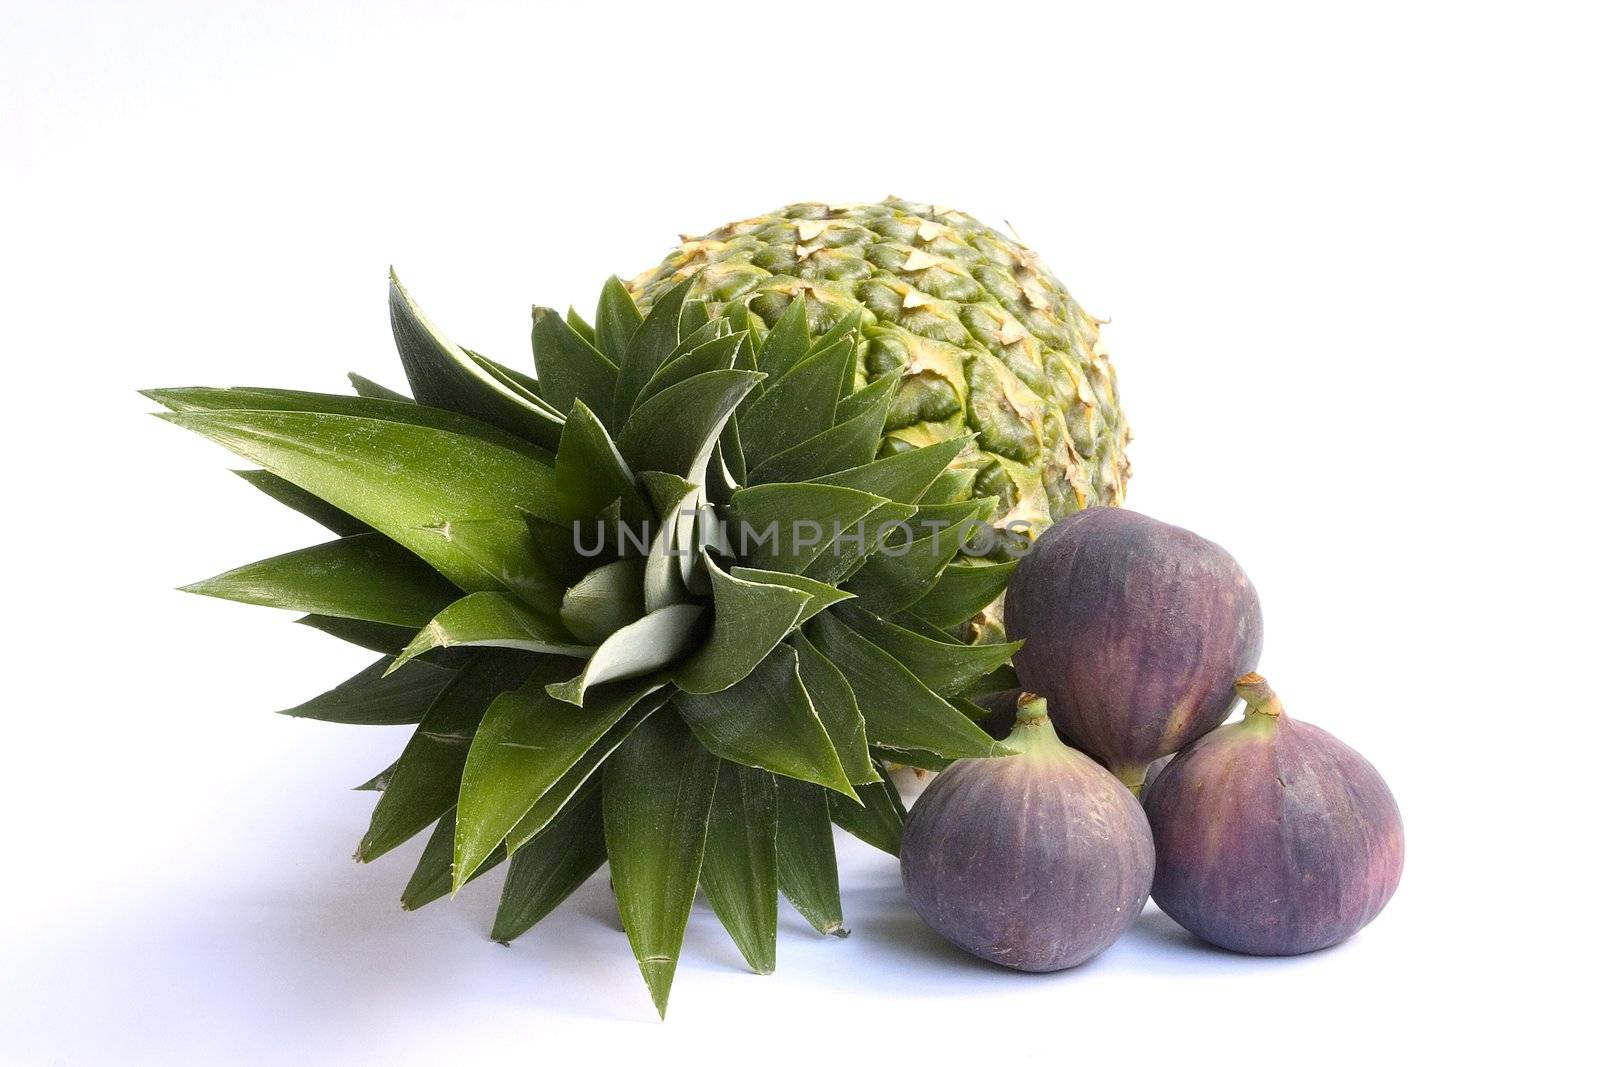 Ananas and figs by miradrozdowski